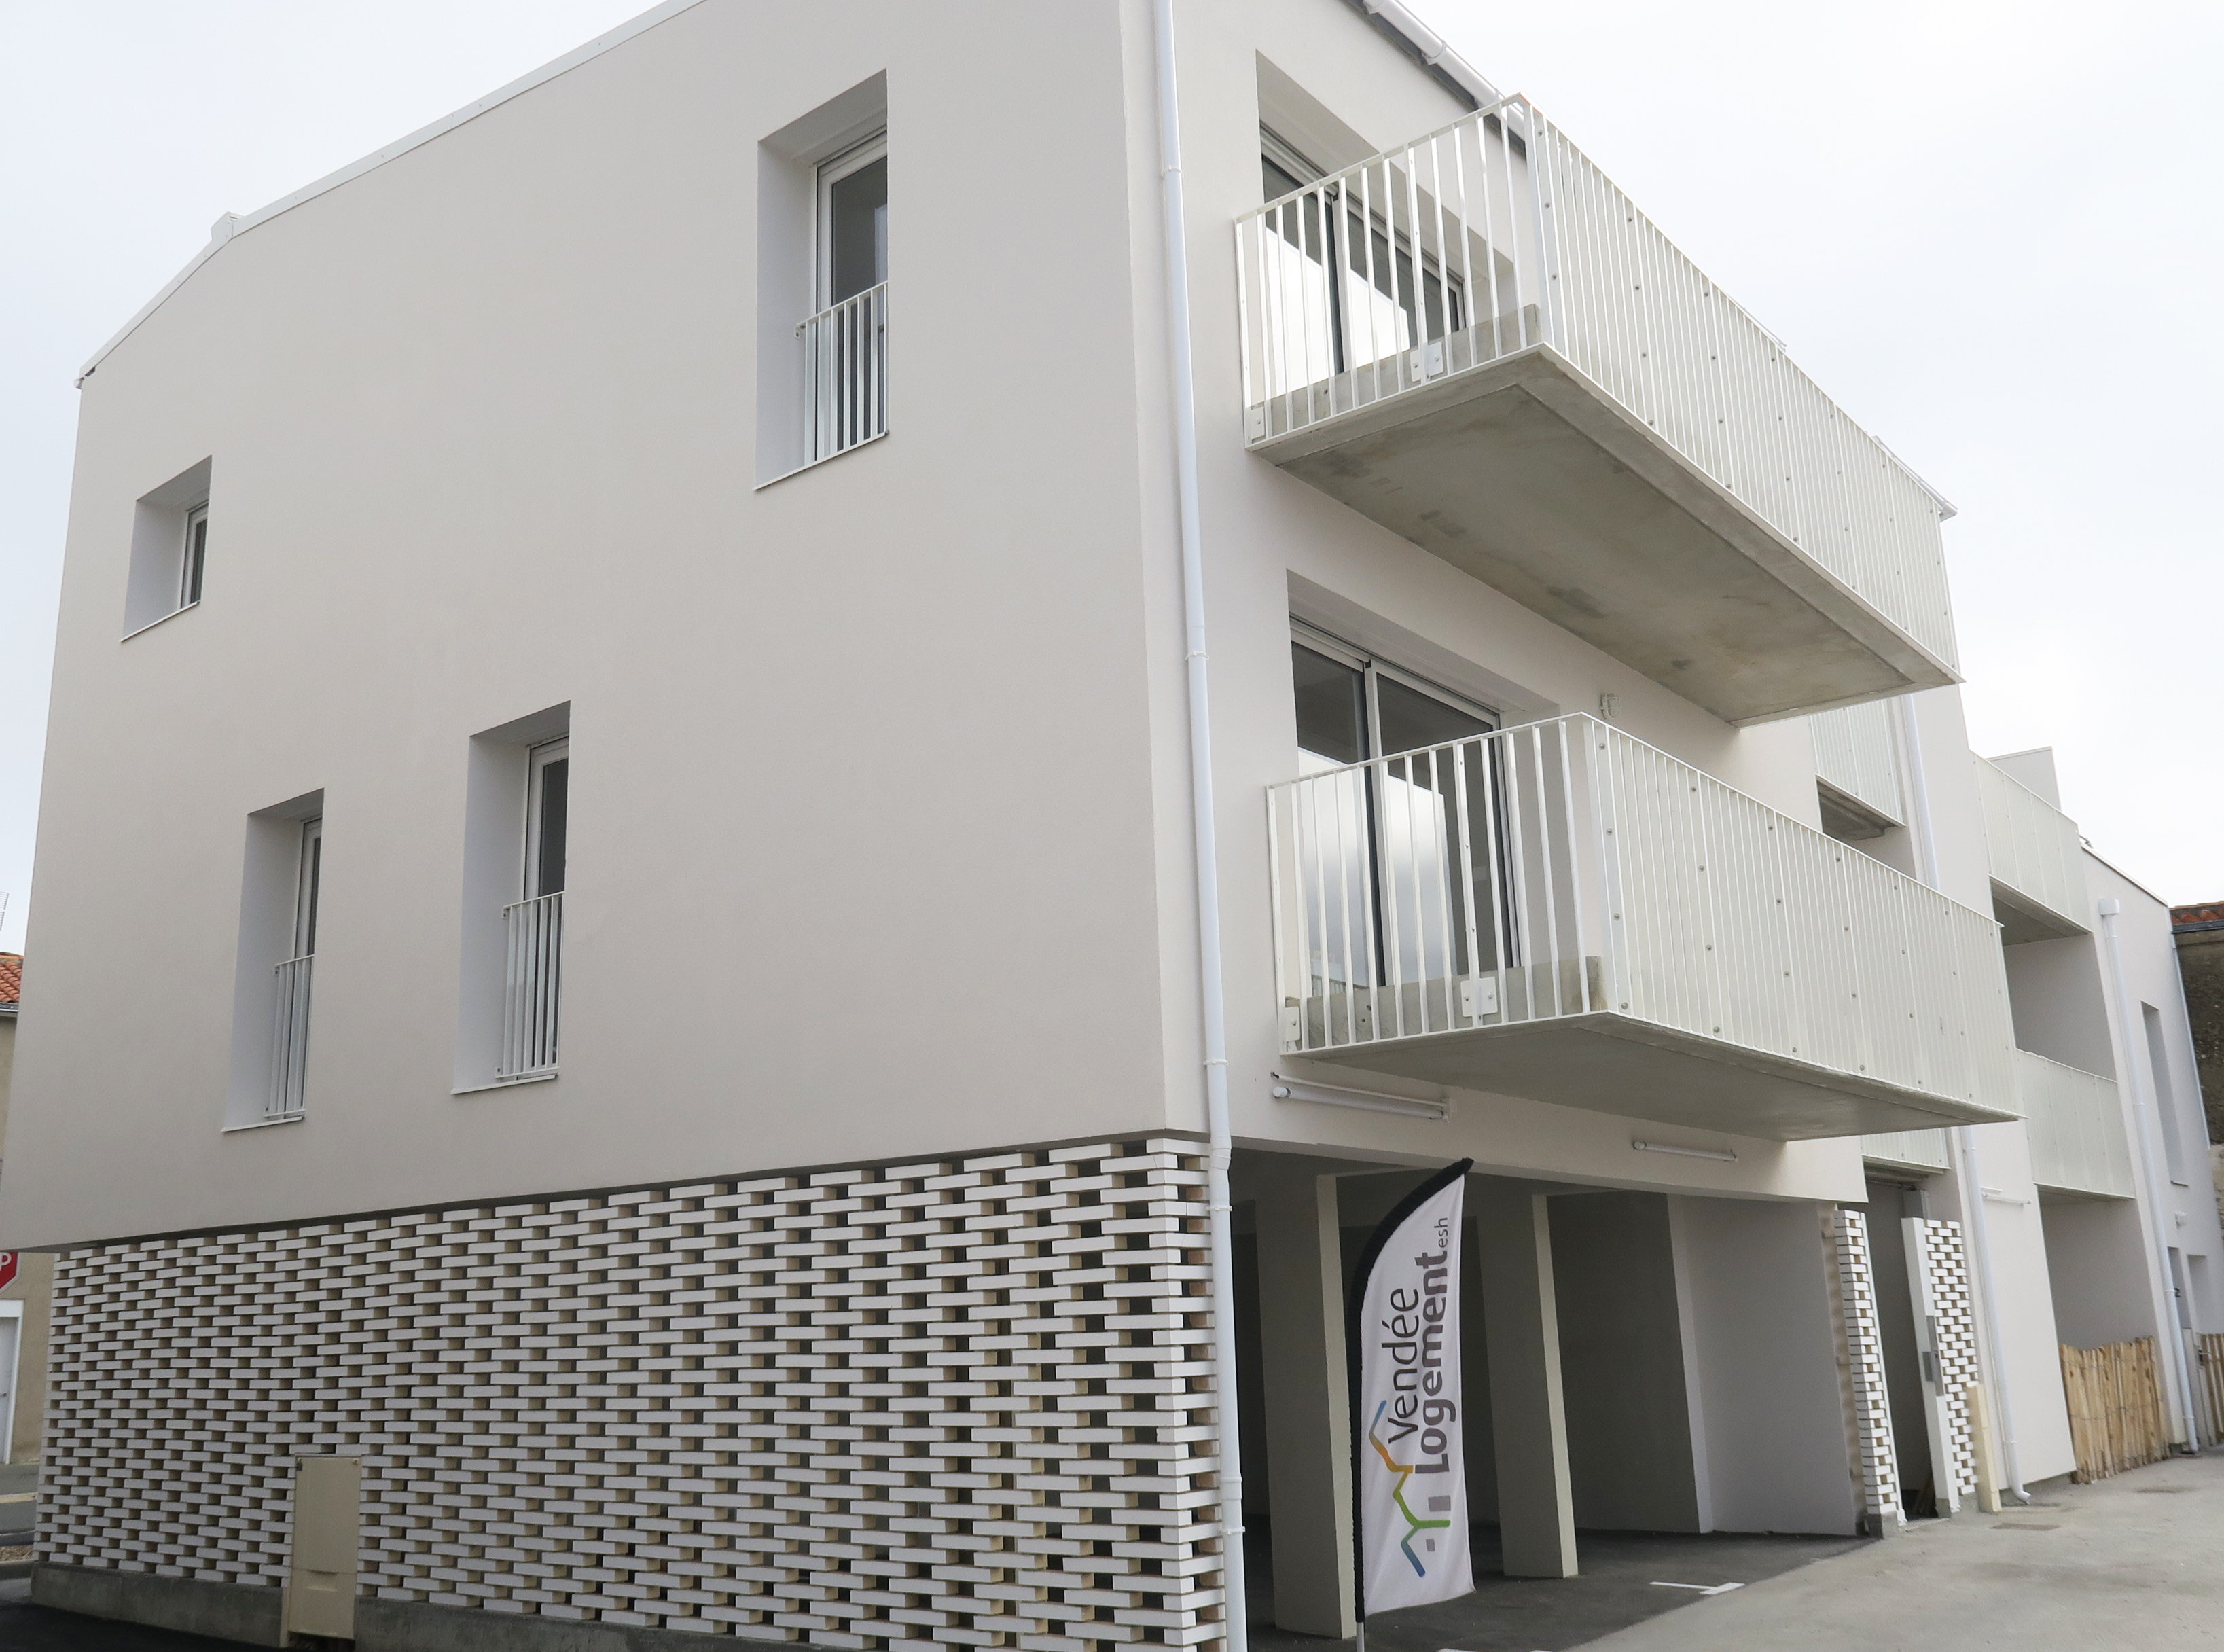 12 logements locatifs inaugurés à Brem sur Mer